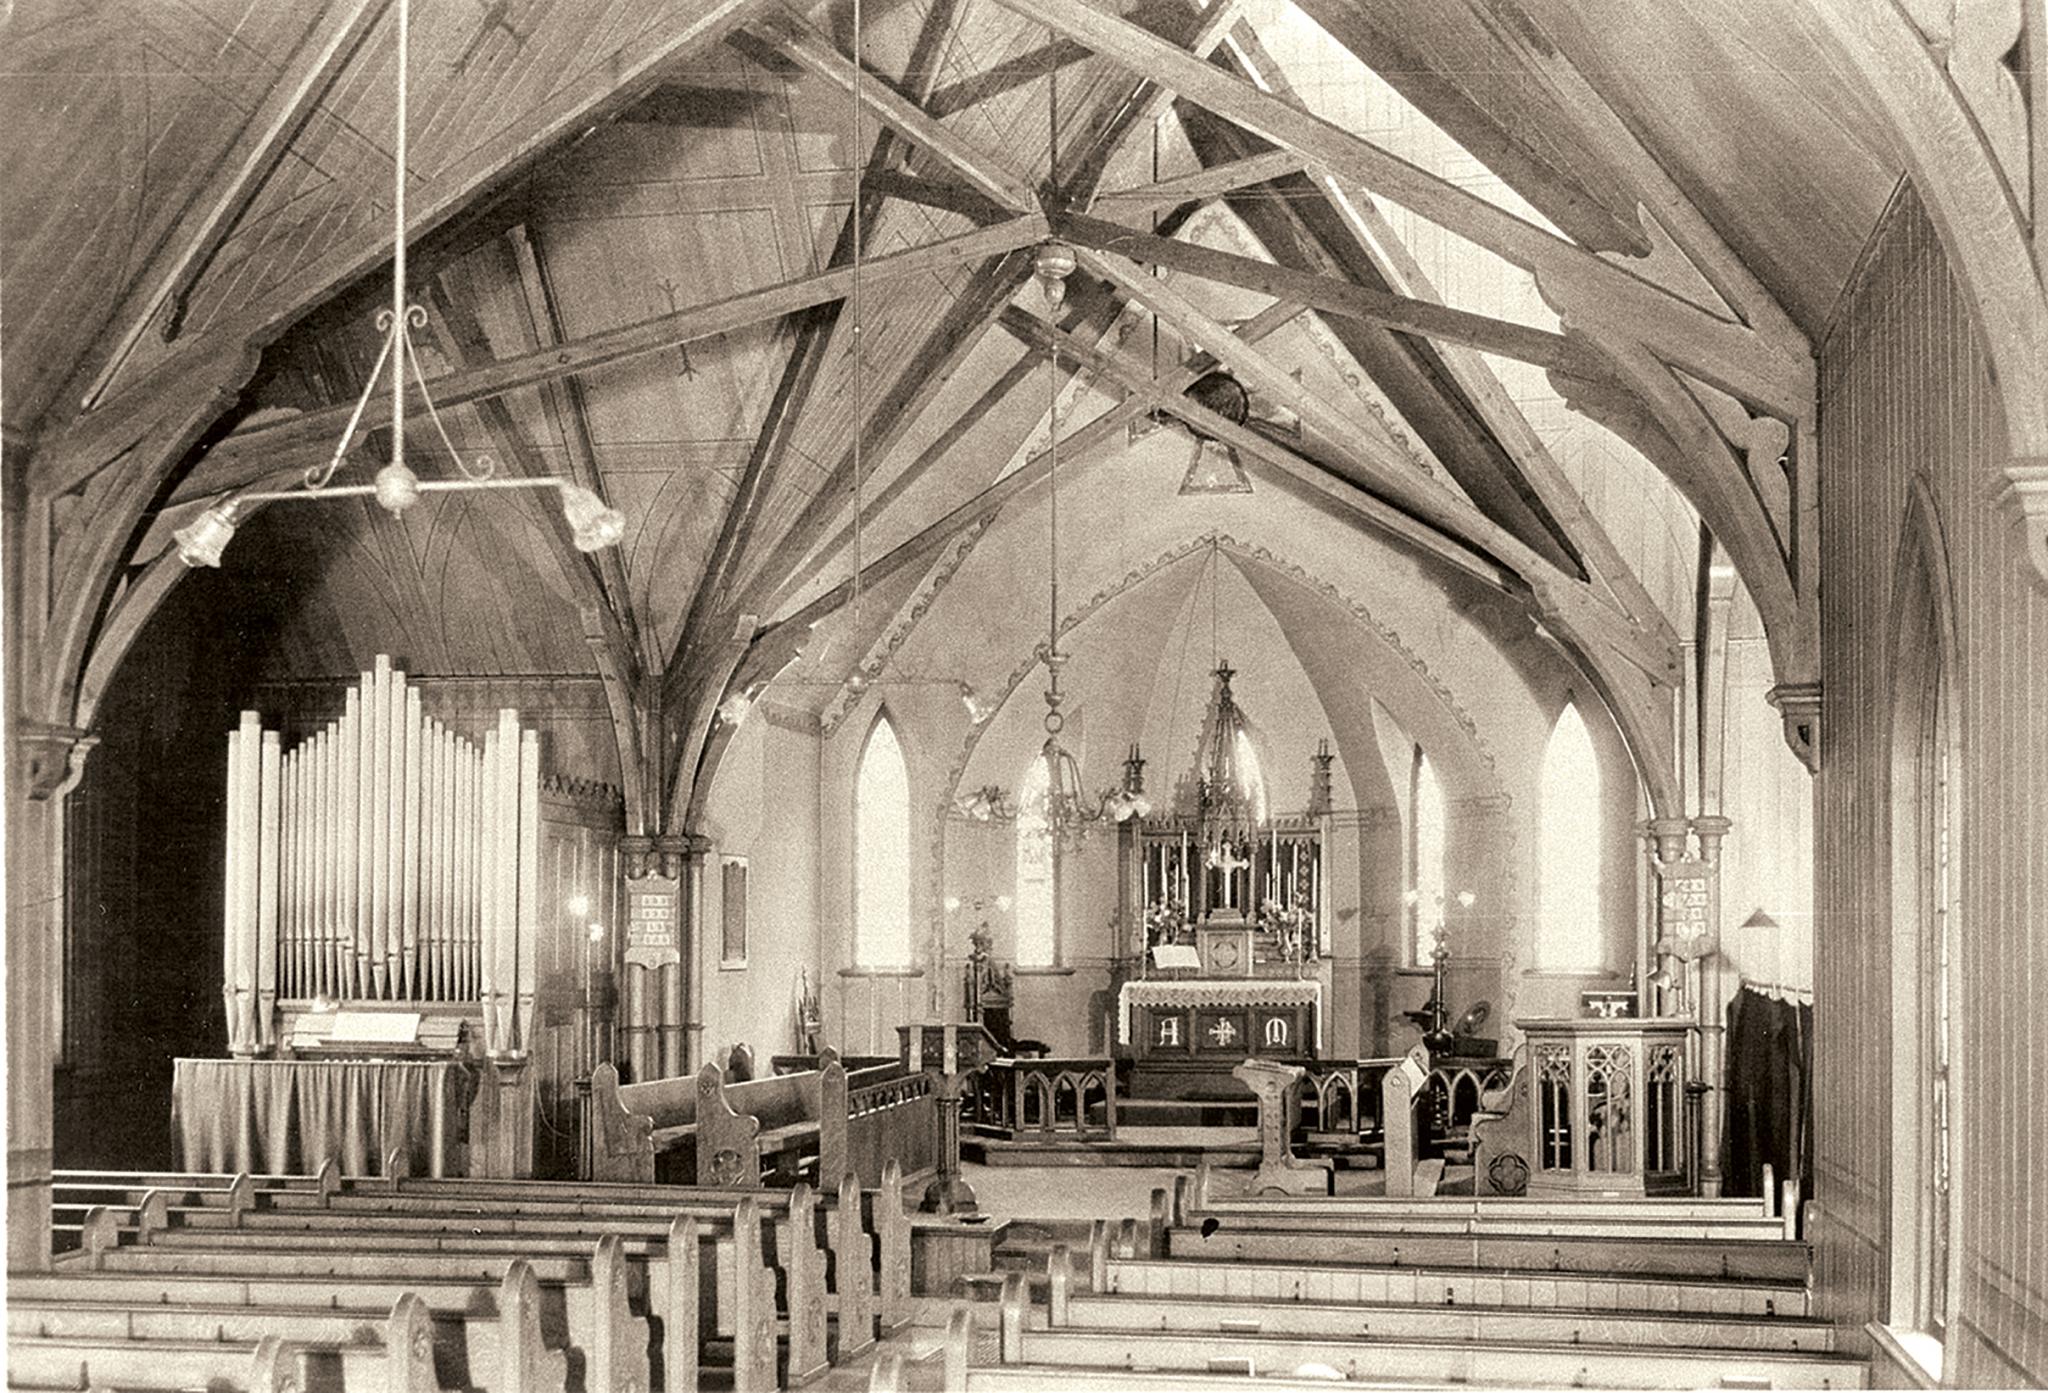 Interior of St. John's Episcopal Church, 1930's
